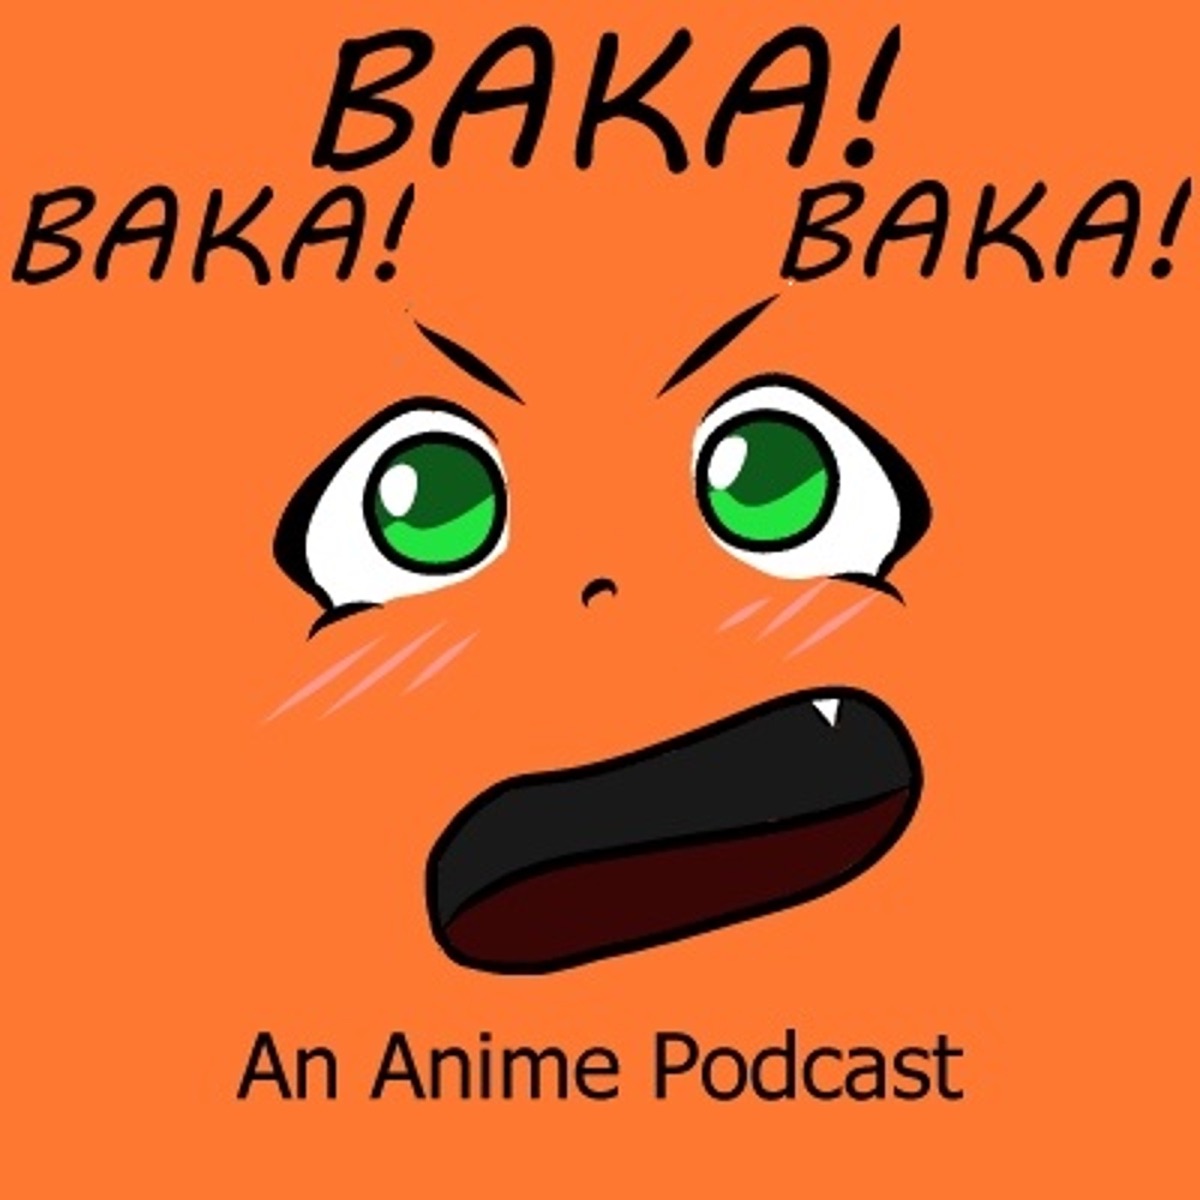 Super Anime Podcast